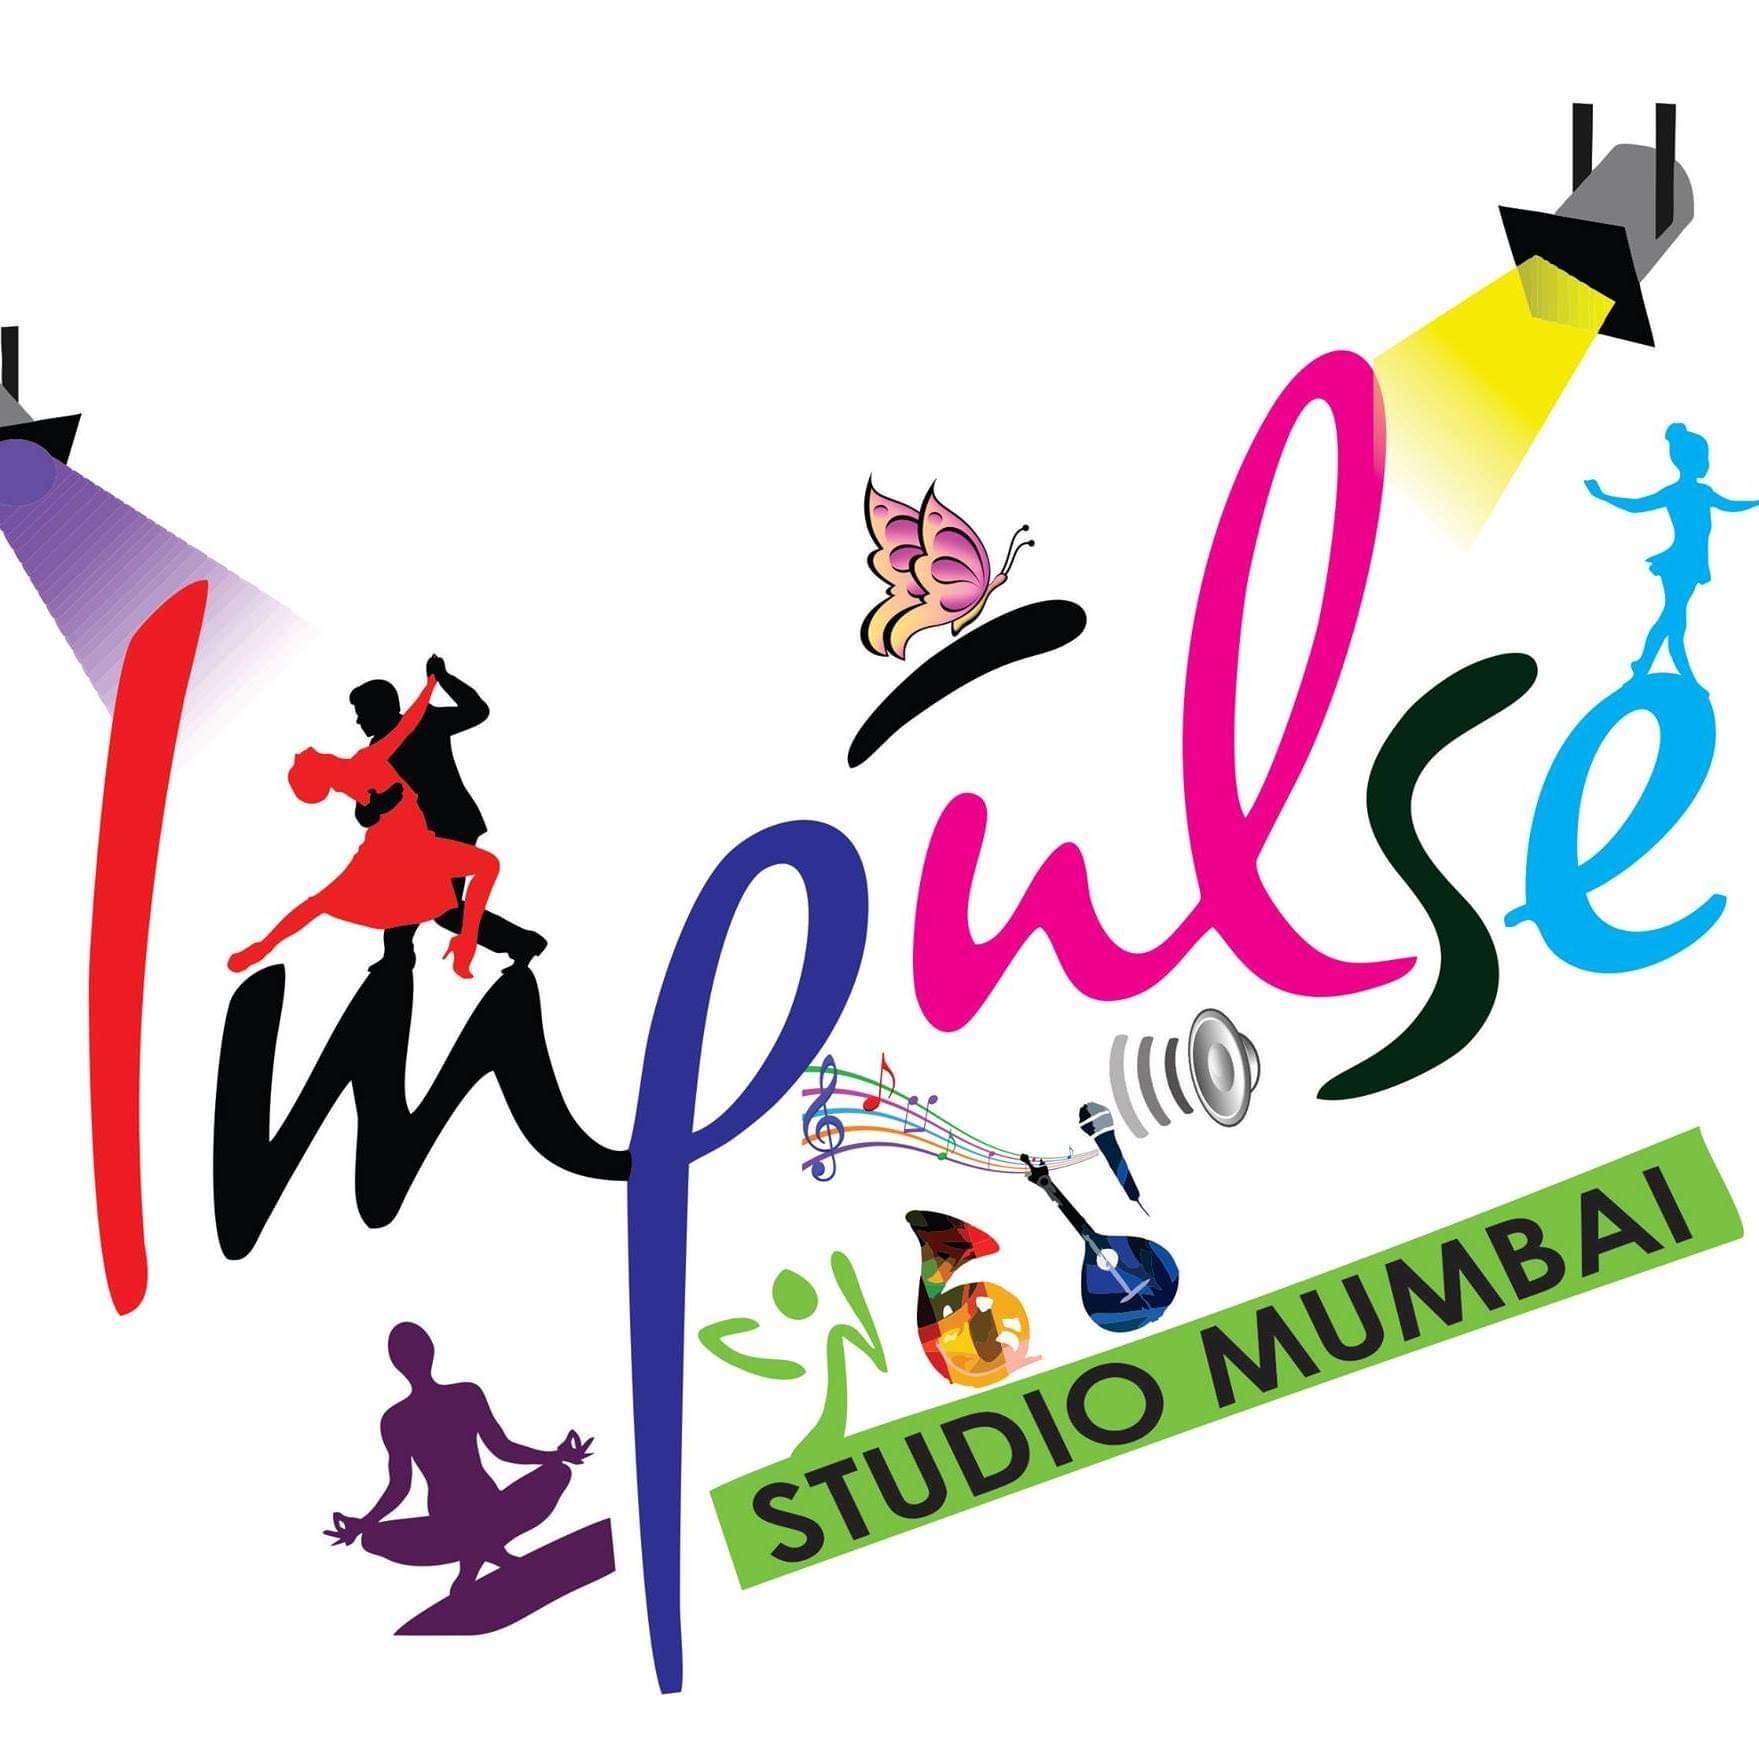 Impulse Studio Mumbai Logo